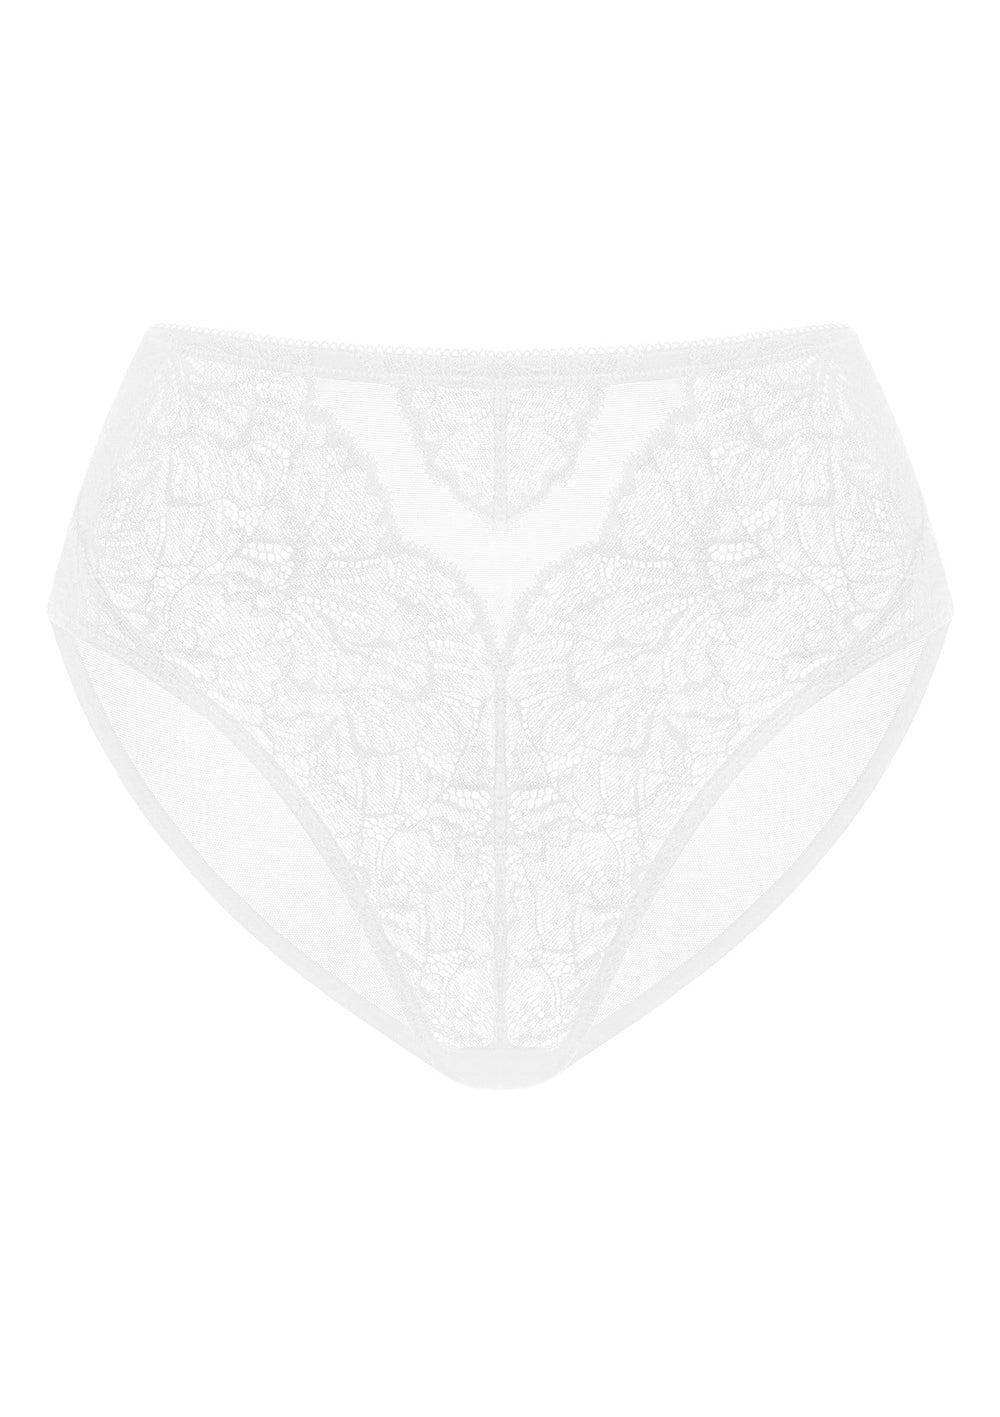 Blossom High-Rise White Lace Brief Underwear